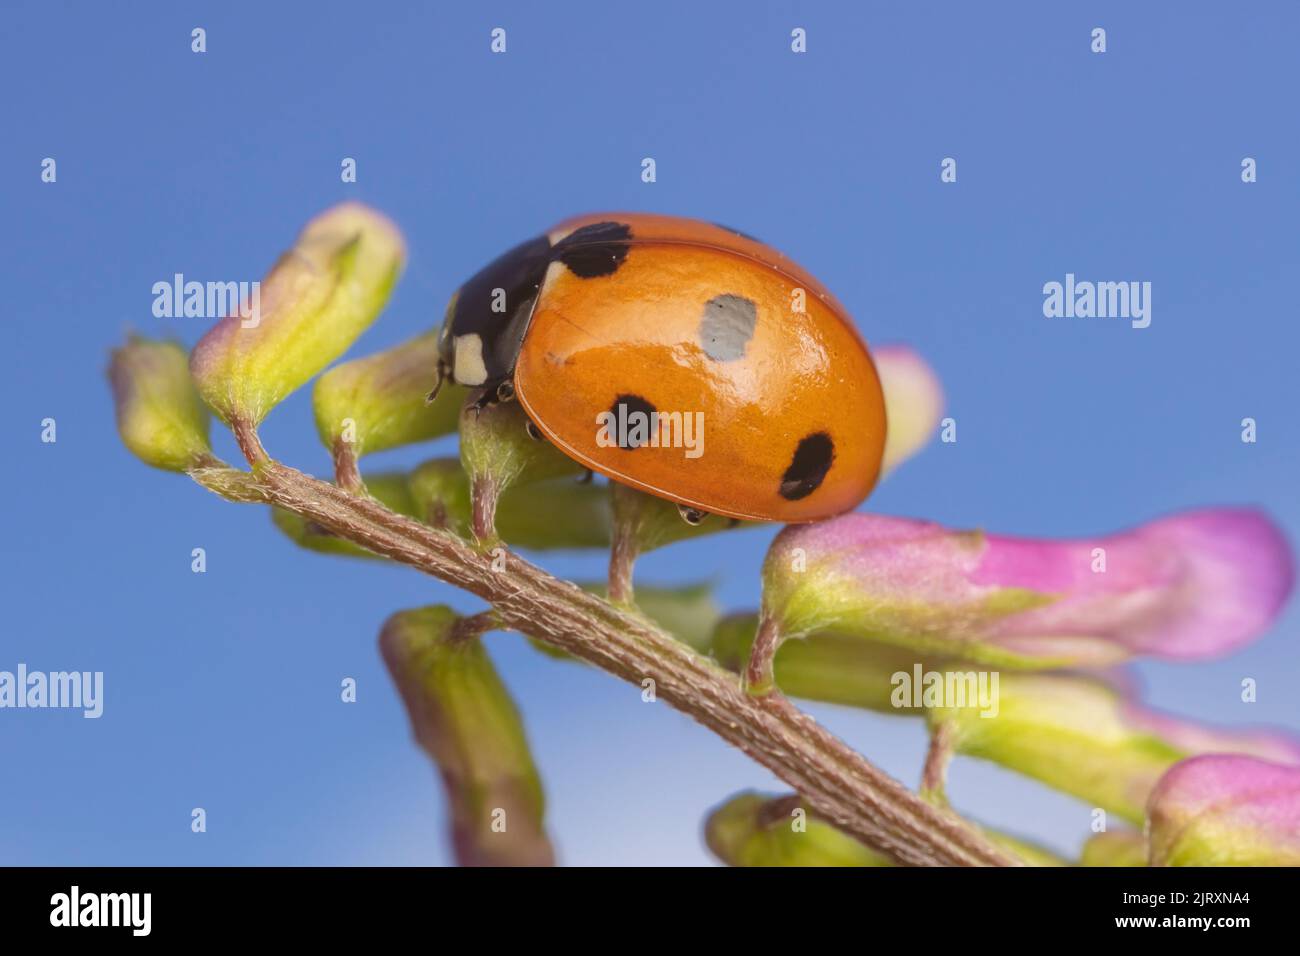 Seven-spotted Lady Beetle (Coccinella septempunctata) Stock Photo